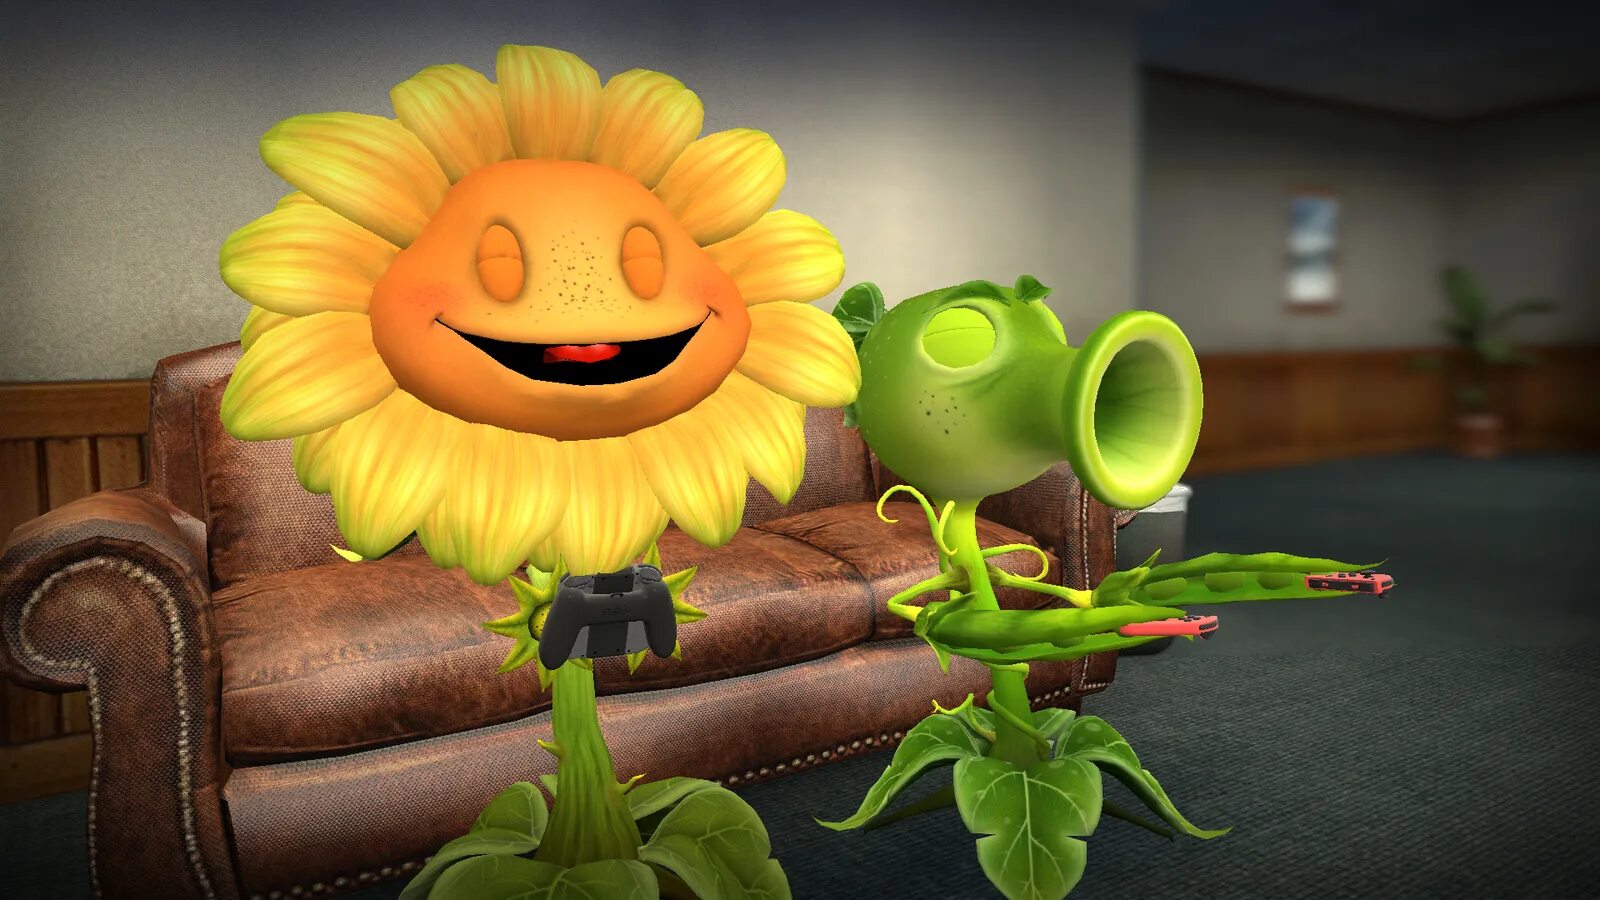 Подсолнух PVZ gw2. Plants vs Zombies Peashooter and Sunflower. PVZ GW Sunflower. Подсолнух Гарден варфаер 2.